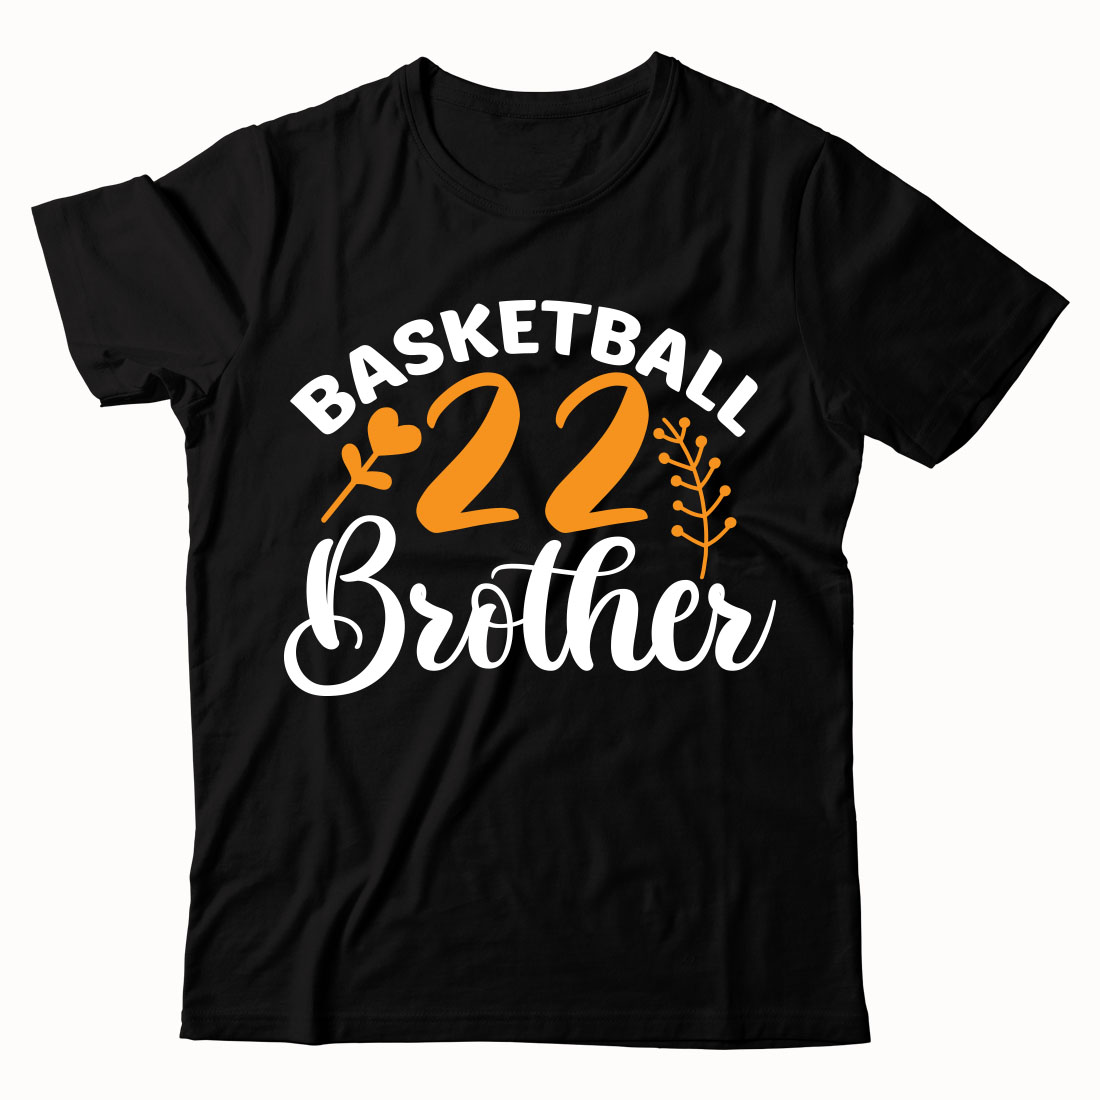 Black shirt that says basketball brother.